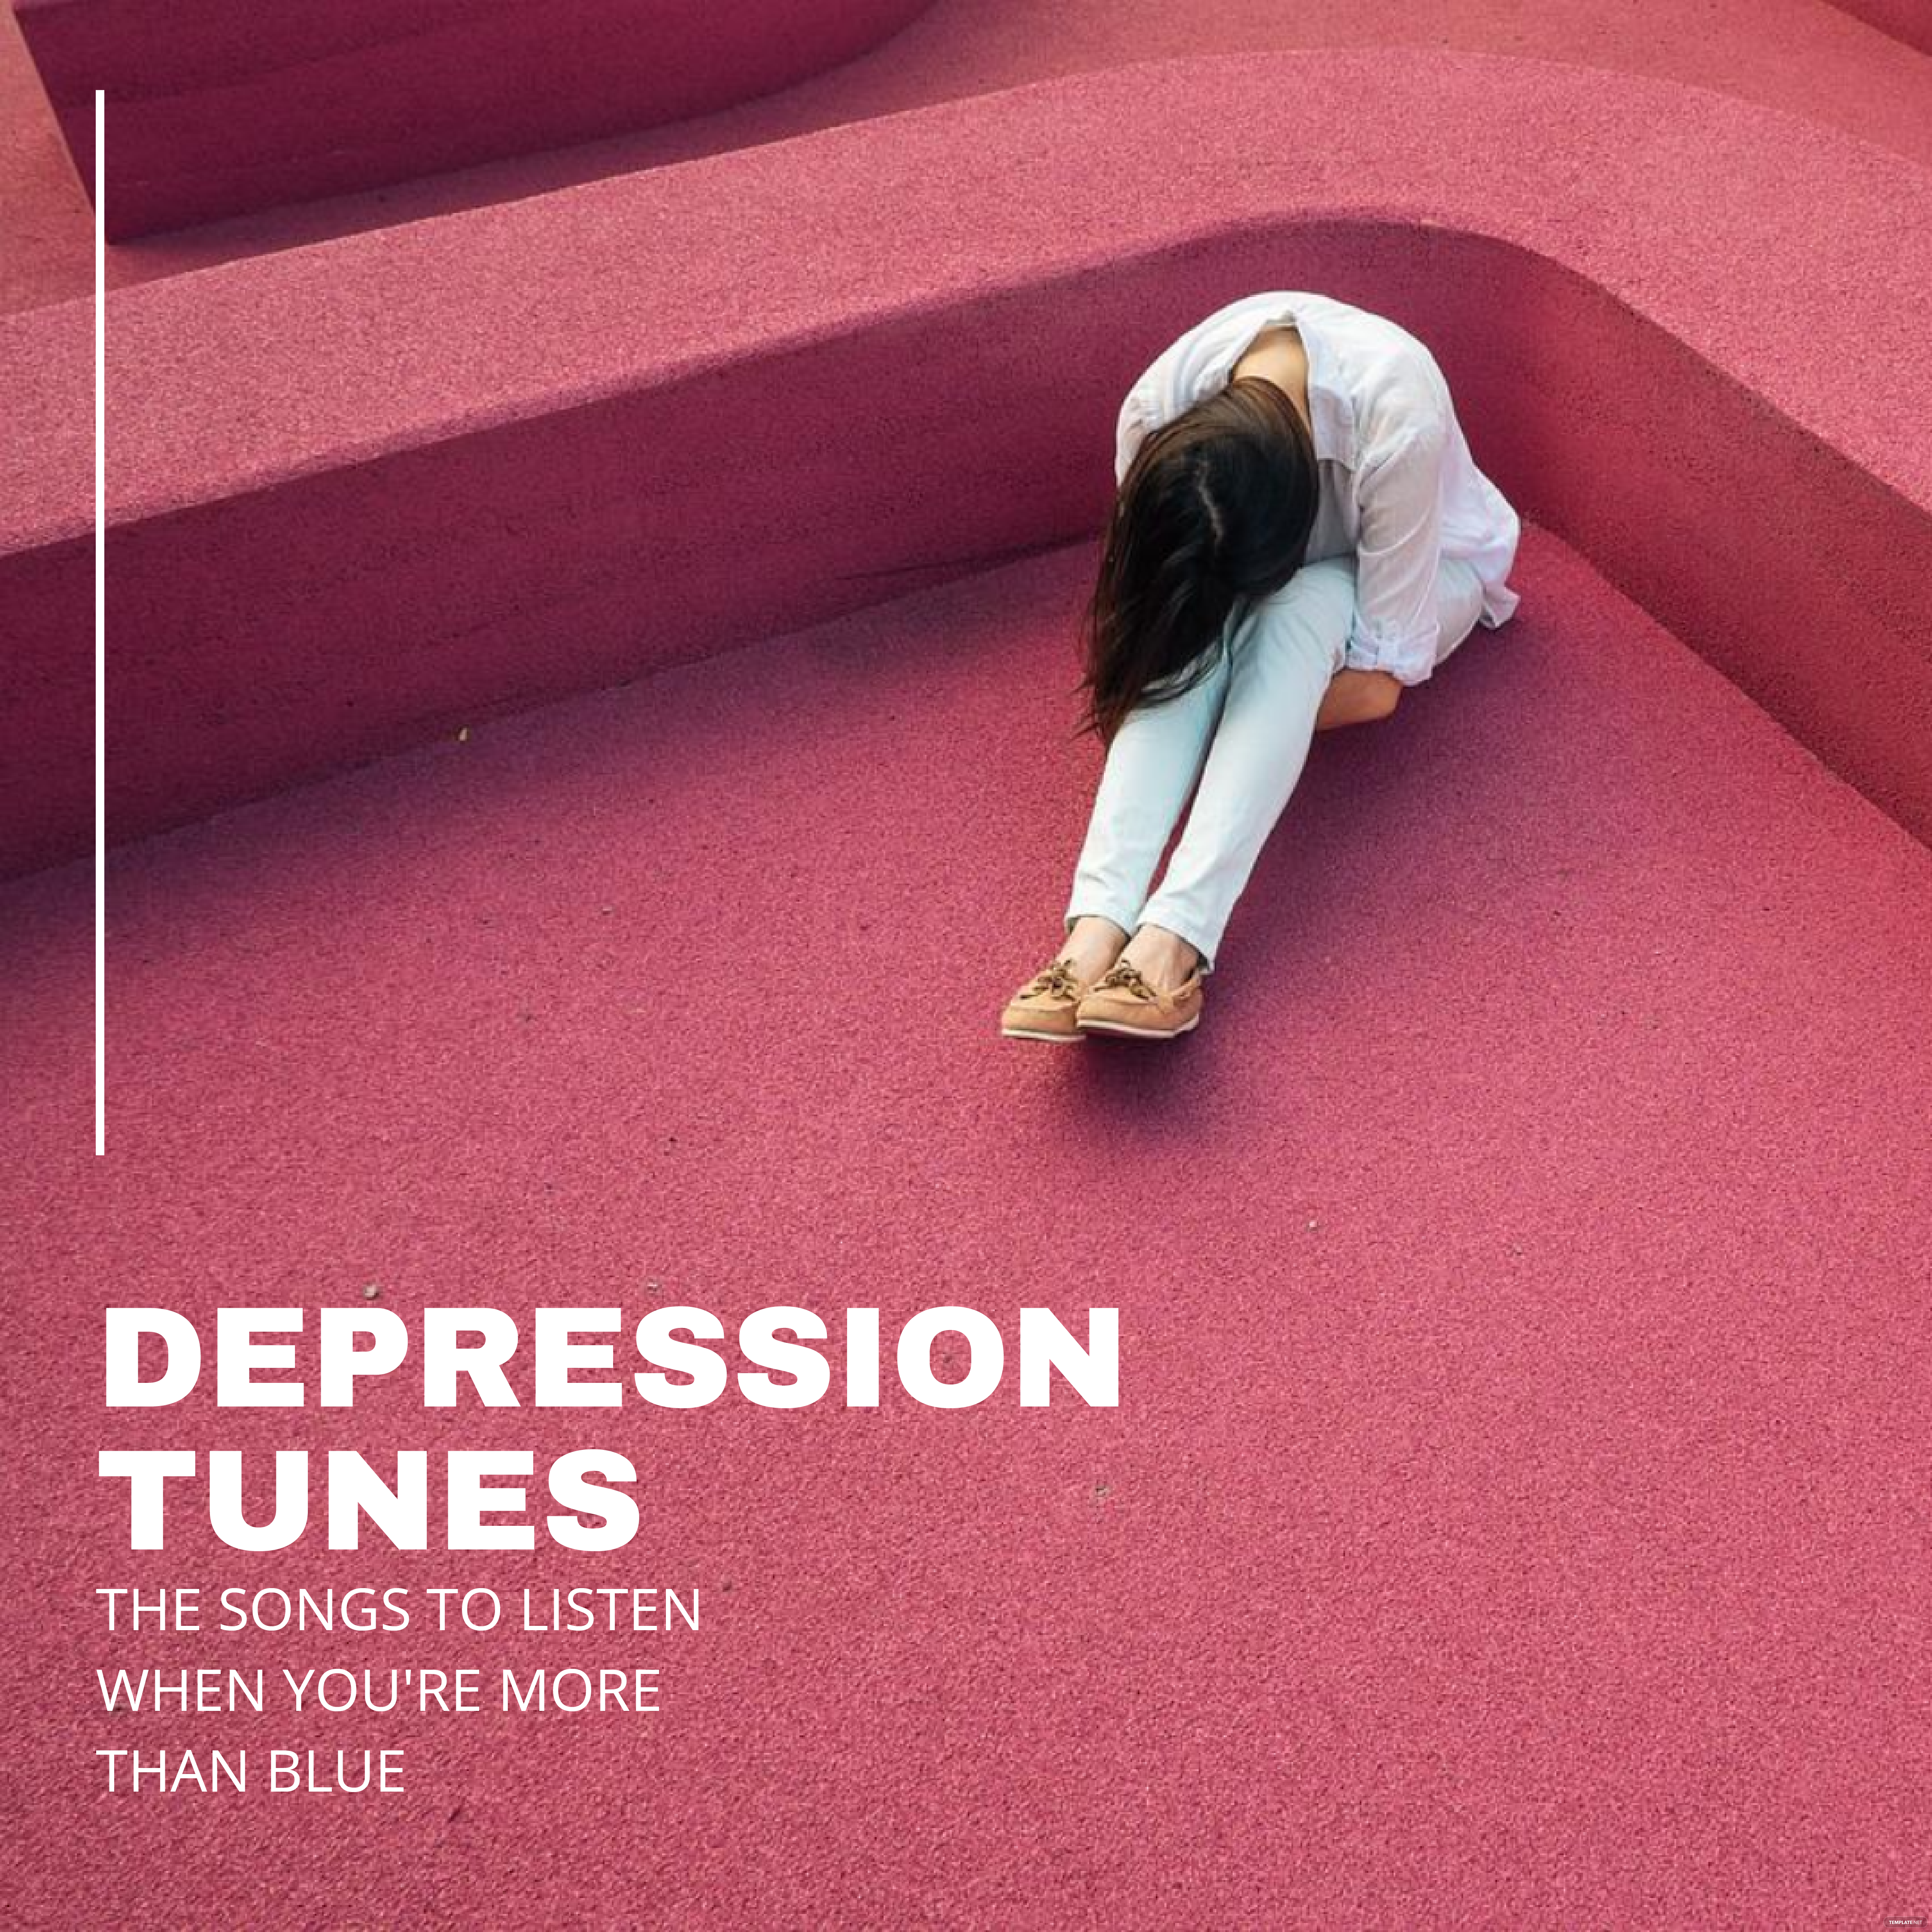 depressed playlist covers